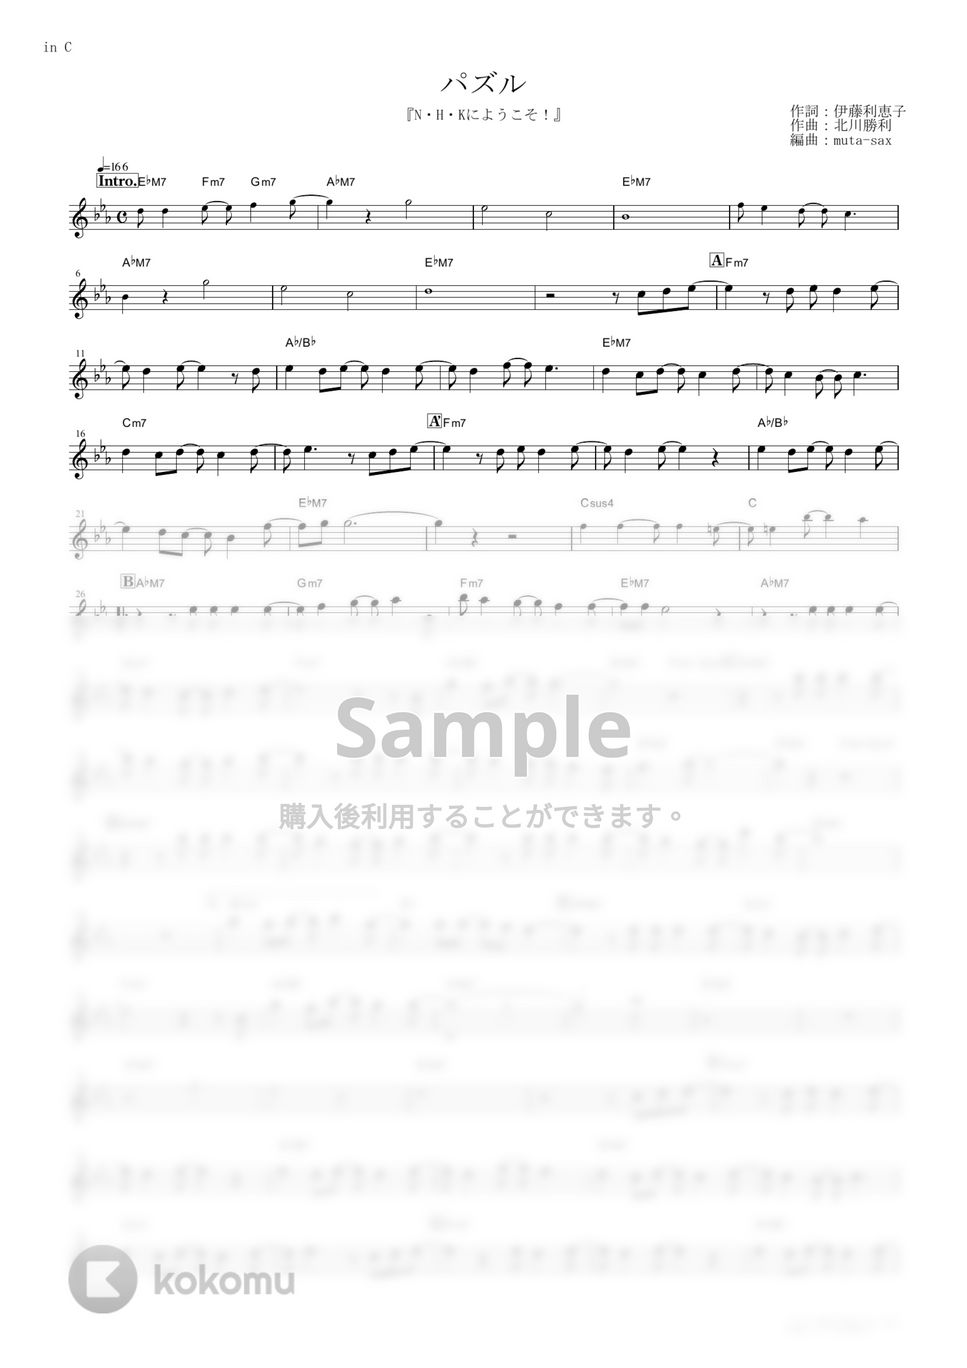 ROUND TABLE feat. Nino - パズル (『N・H・Kにようこそ！』 / in C) by muta-sax